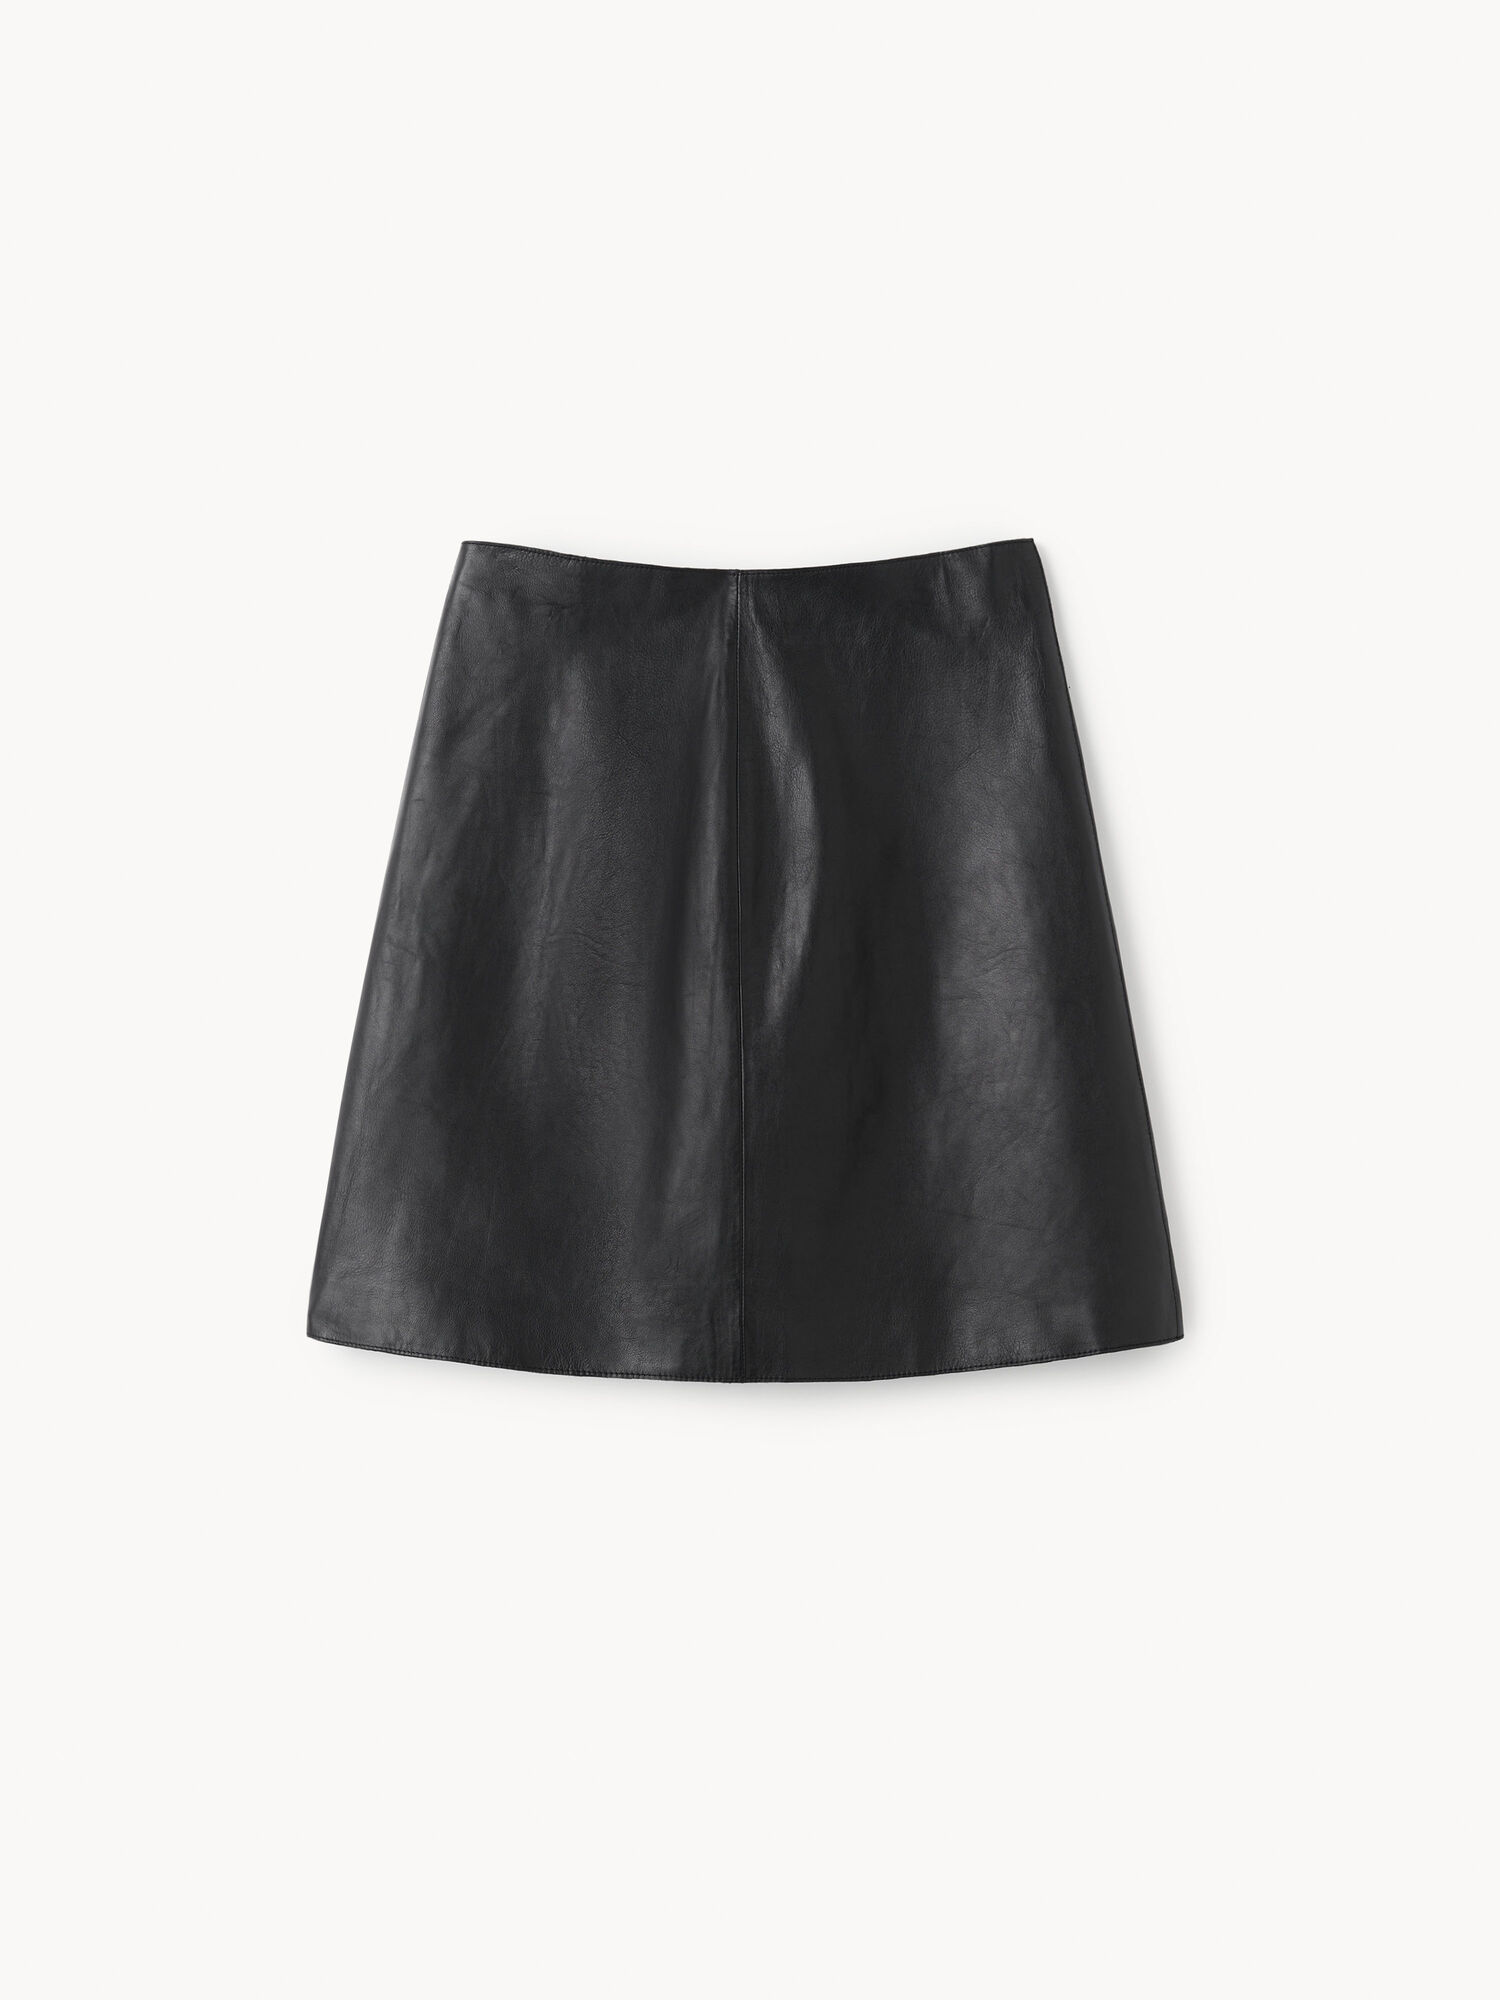 Coras leather mini skirt